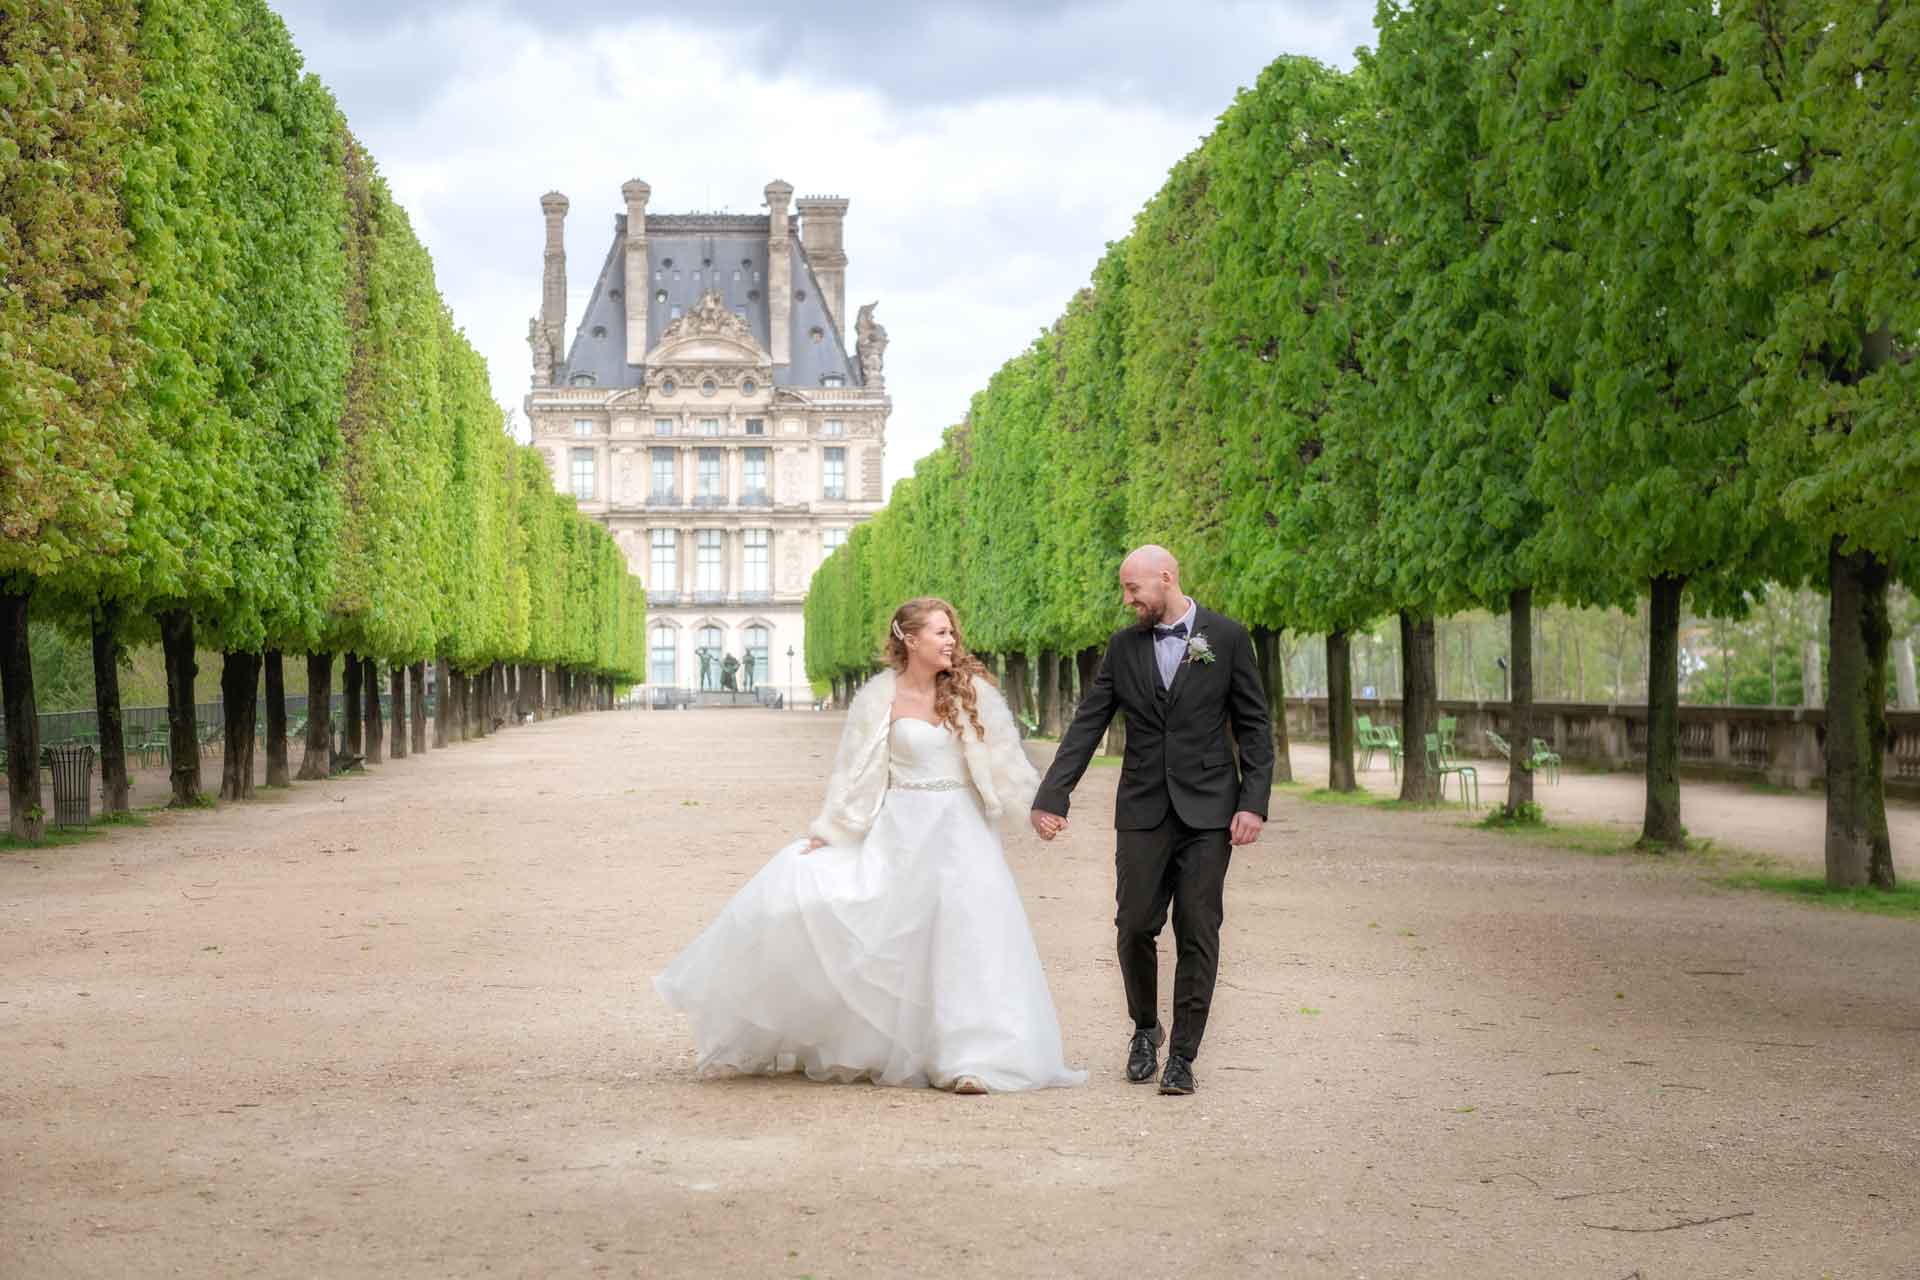 Pre Wedding photo shoot in Paris, France